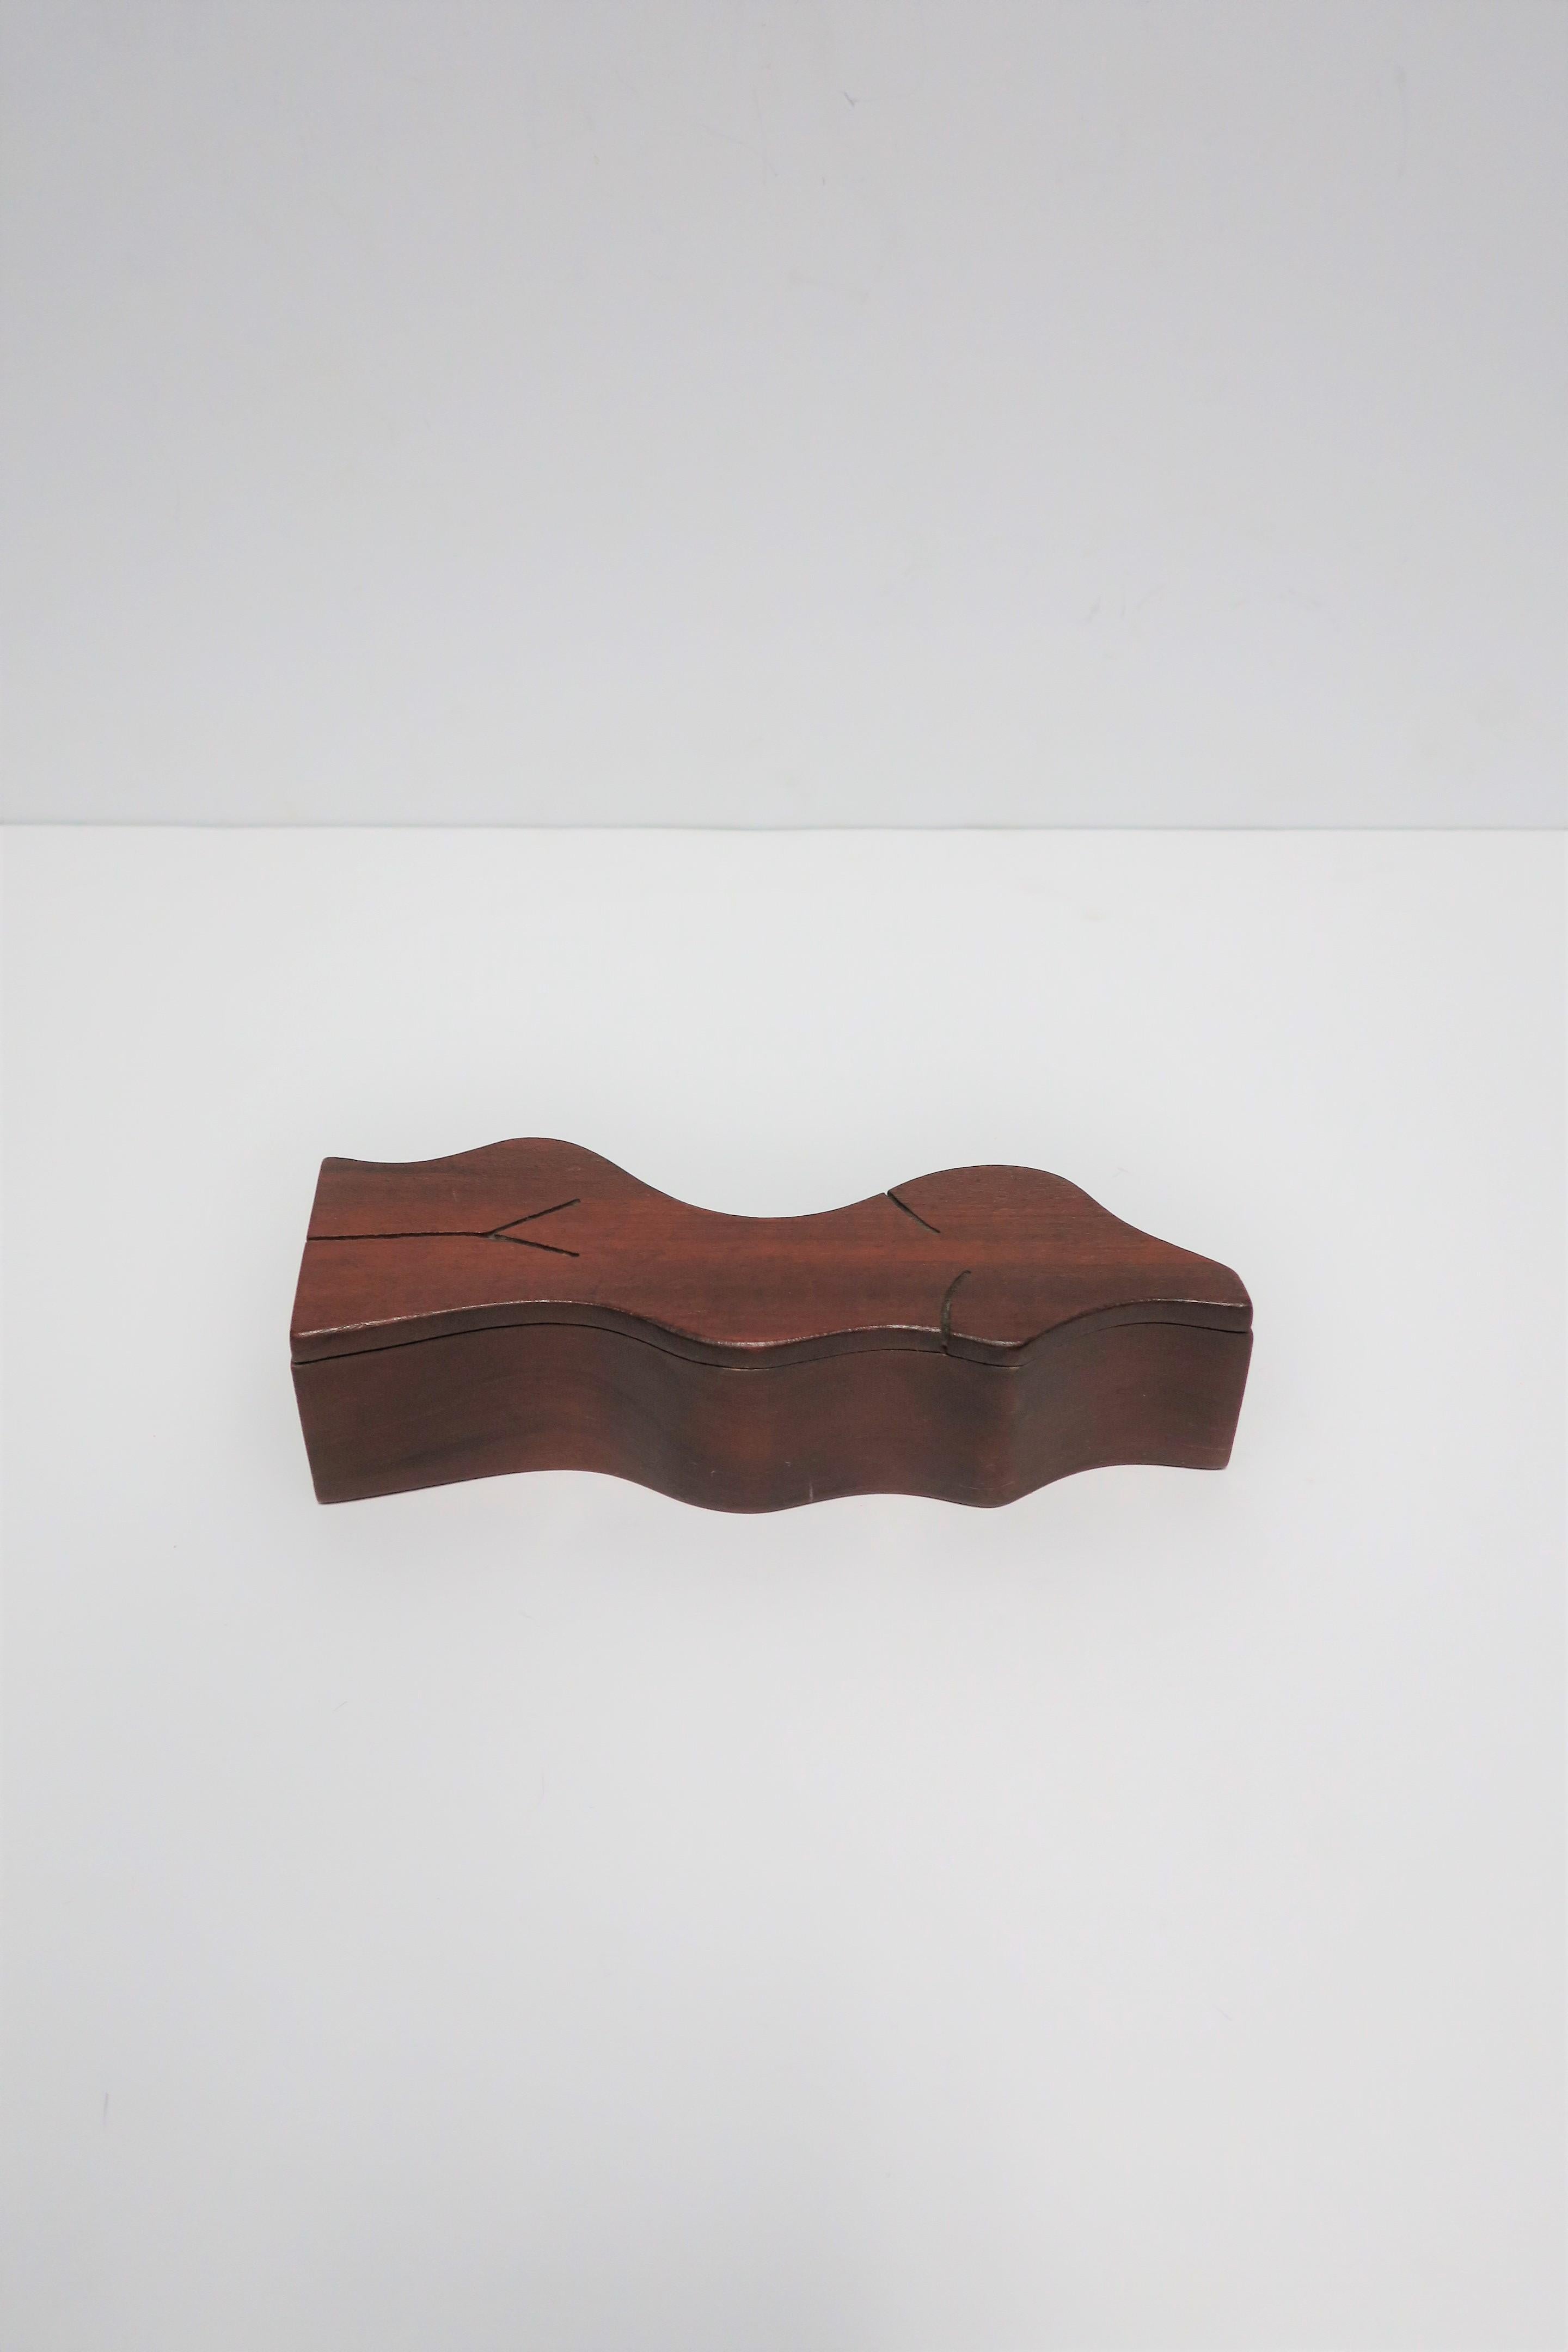 Torso Figurative Wood Jewelry or Decorative Box 6